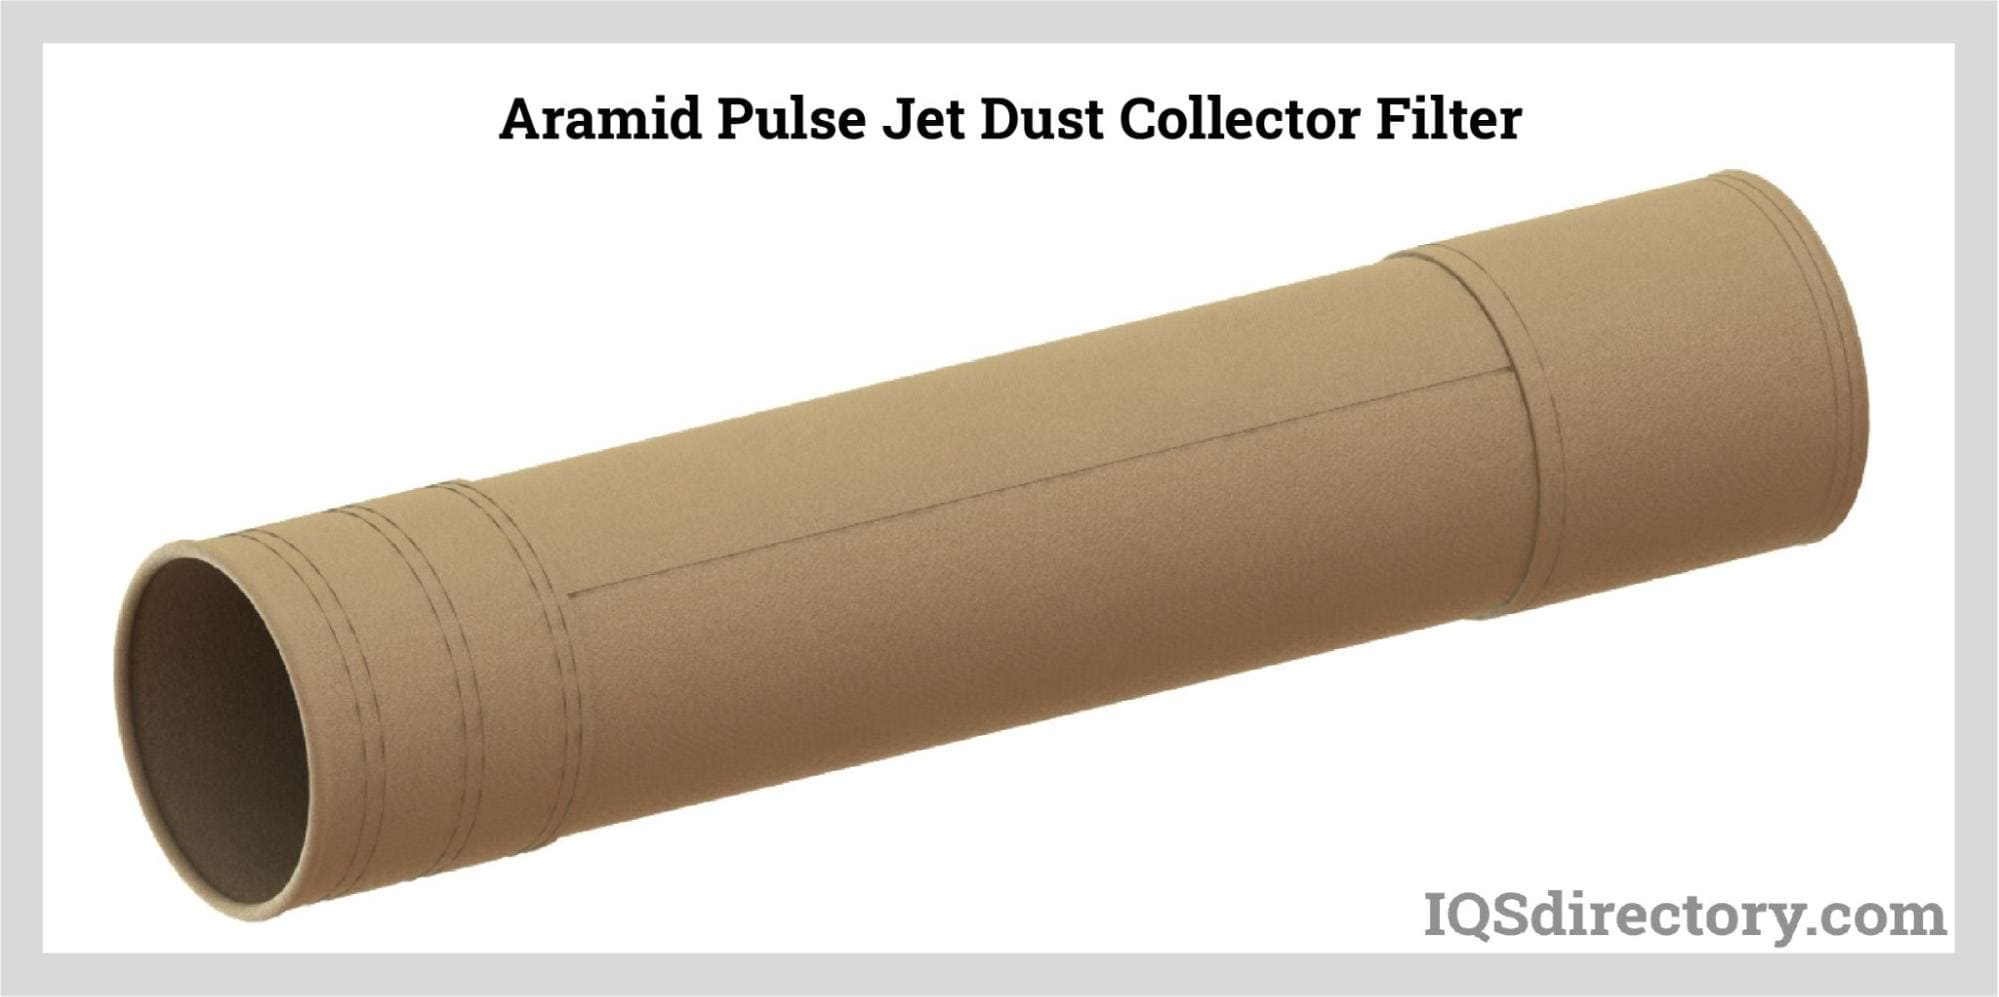 Aramid Pulse Jet Dust Collector Filter